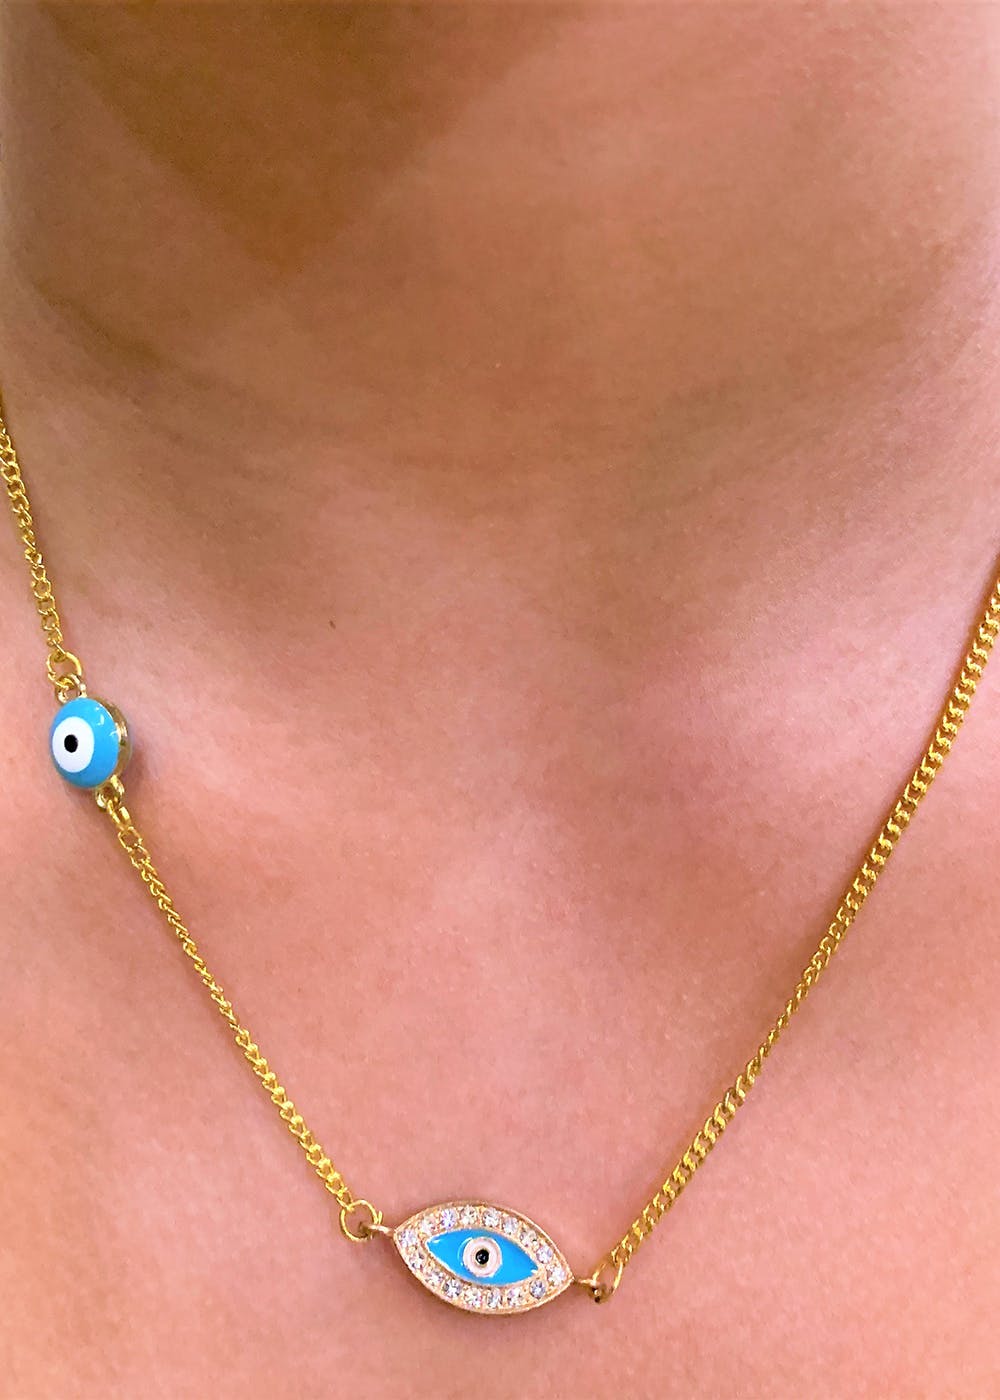 Evil Eye Necklace - Silver Bead Chain - April Soderstrom